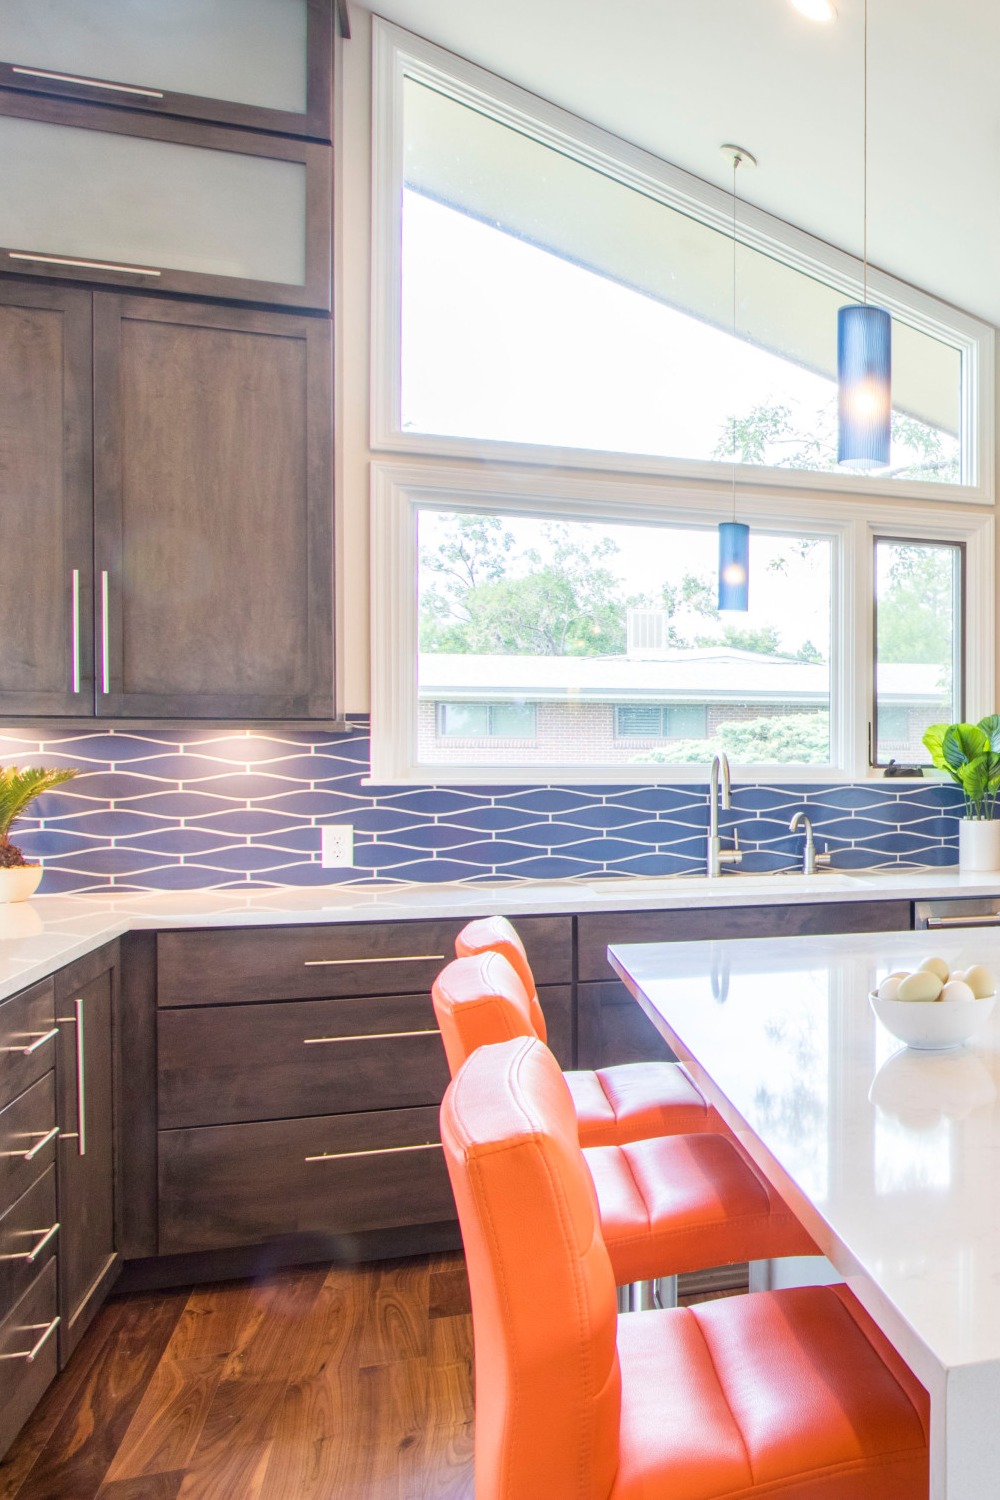 Blue Wave Tile Kitchen Backsplash Shaker Gray Cabinetry White Quartz Countertops Dark Wood Floor